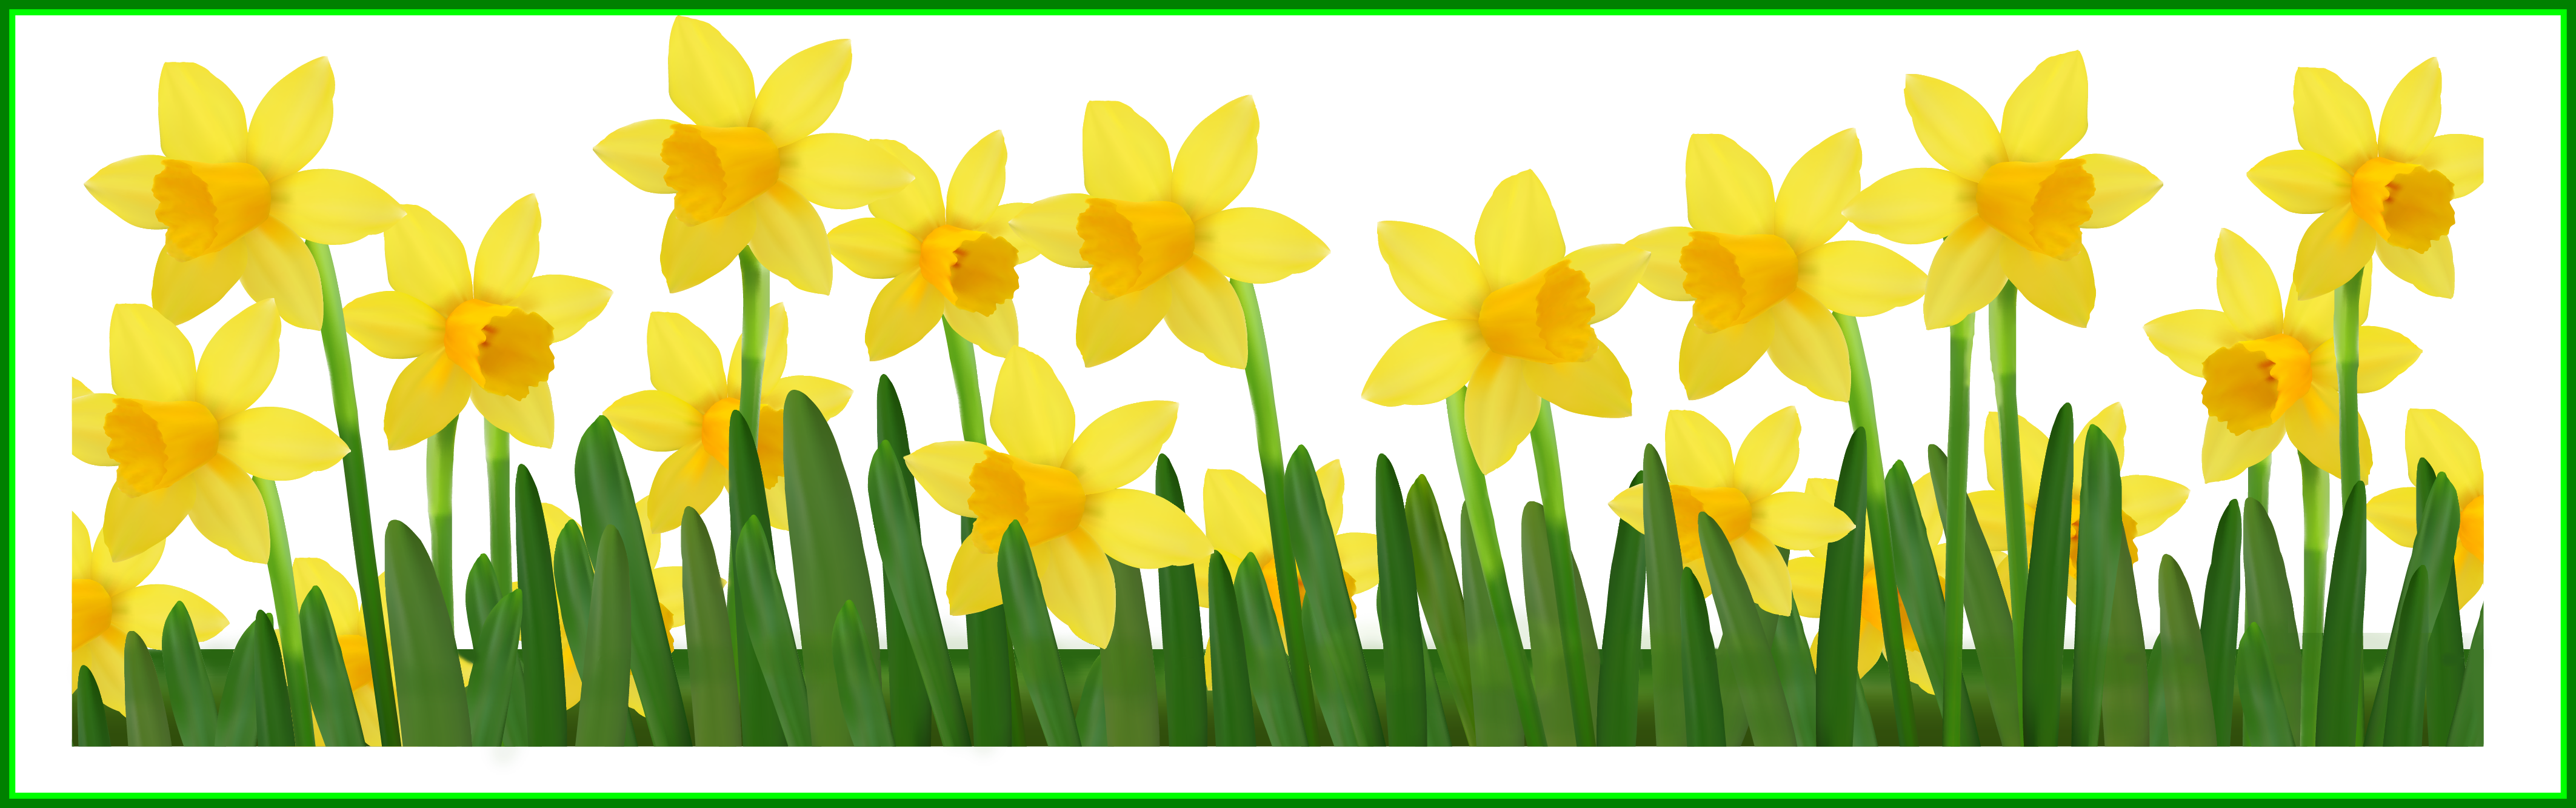 daffodil clipart jonquil